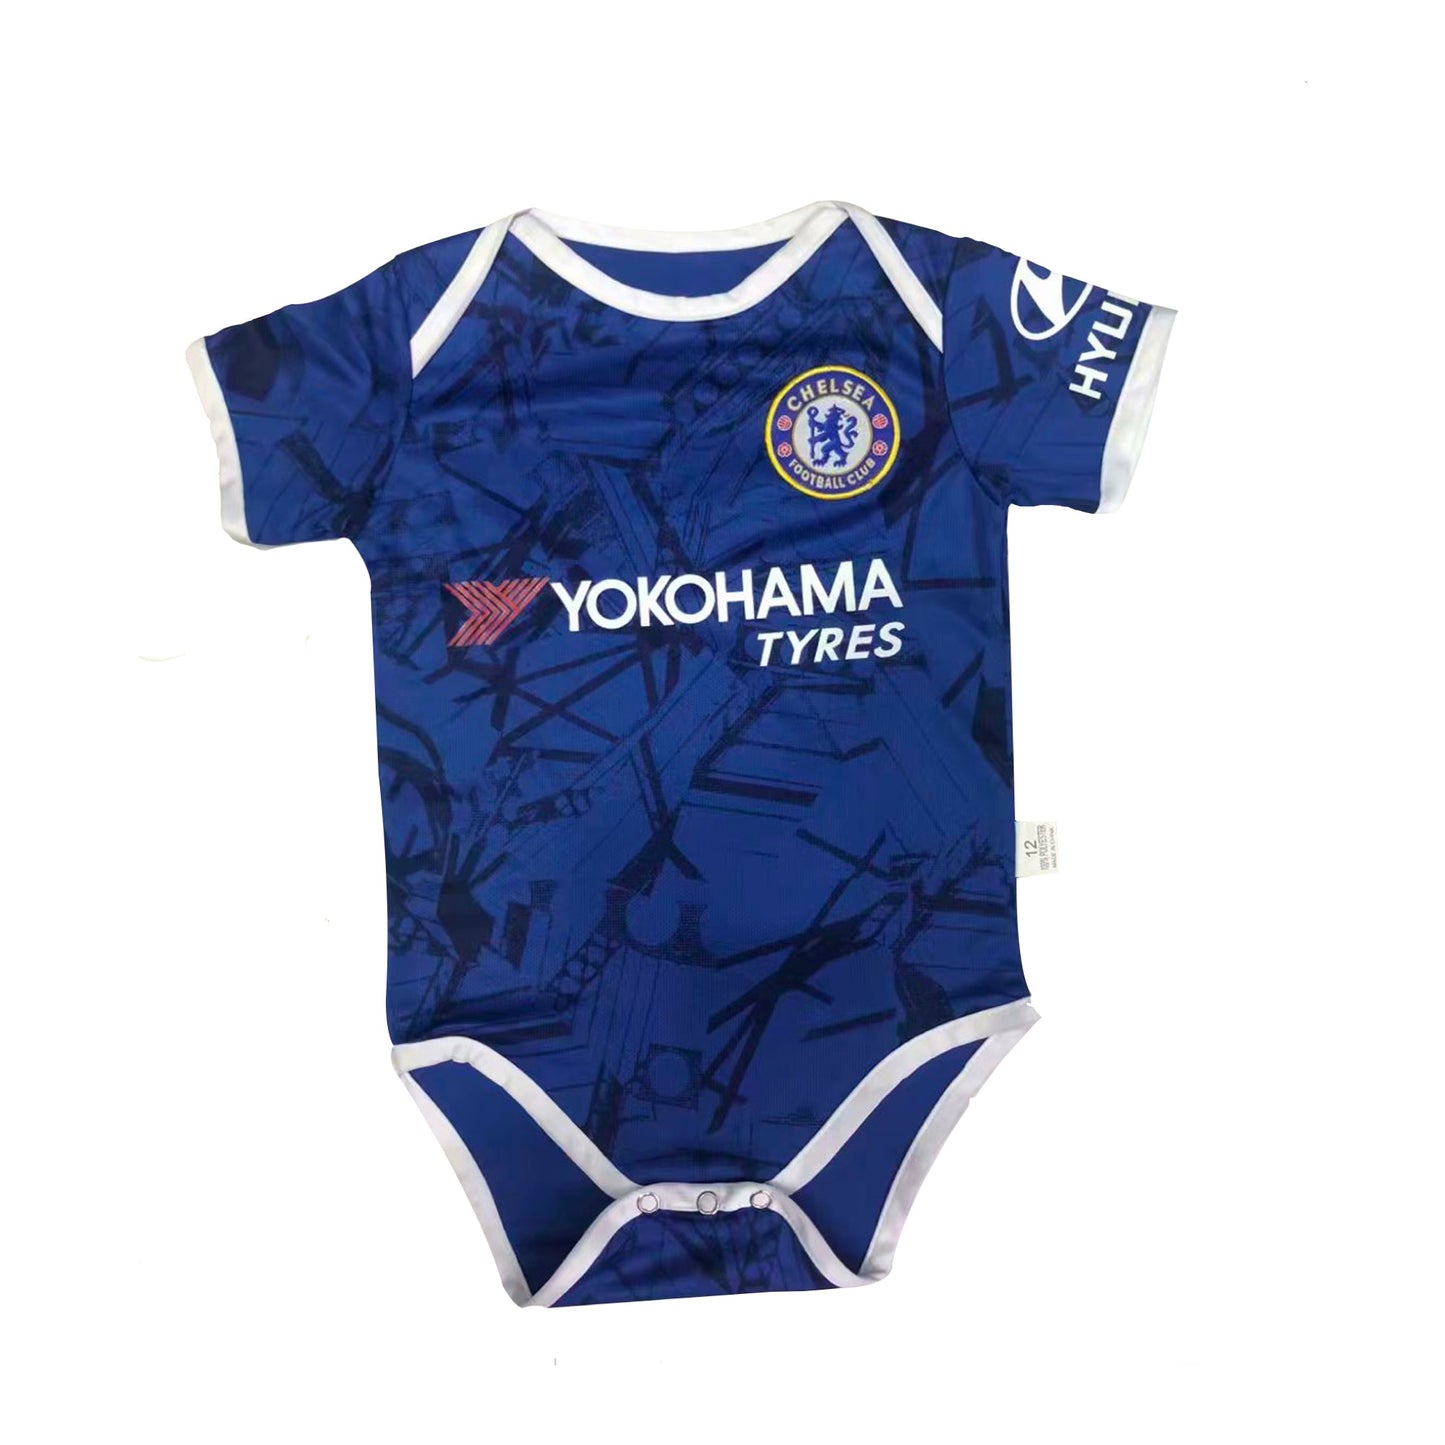 Chelsea baby jersey 2019/20 - Mitani Store